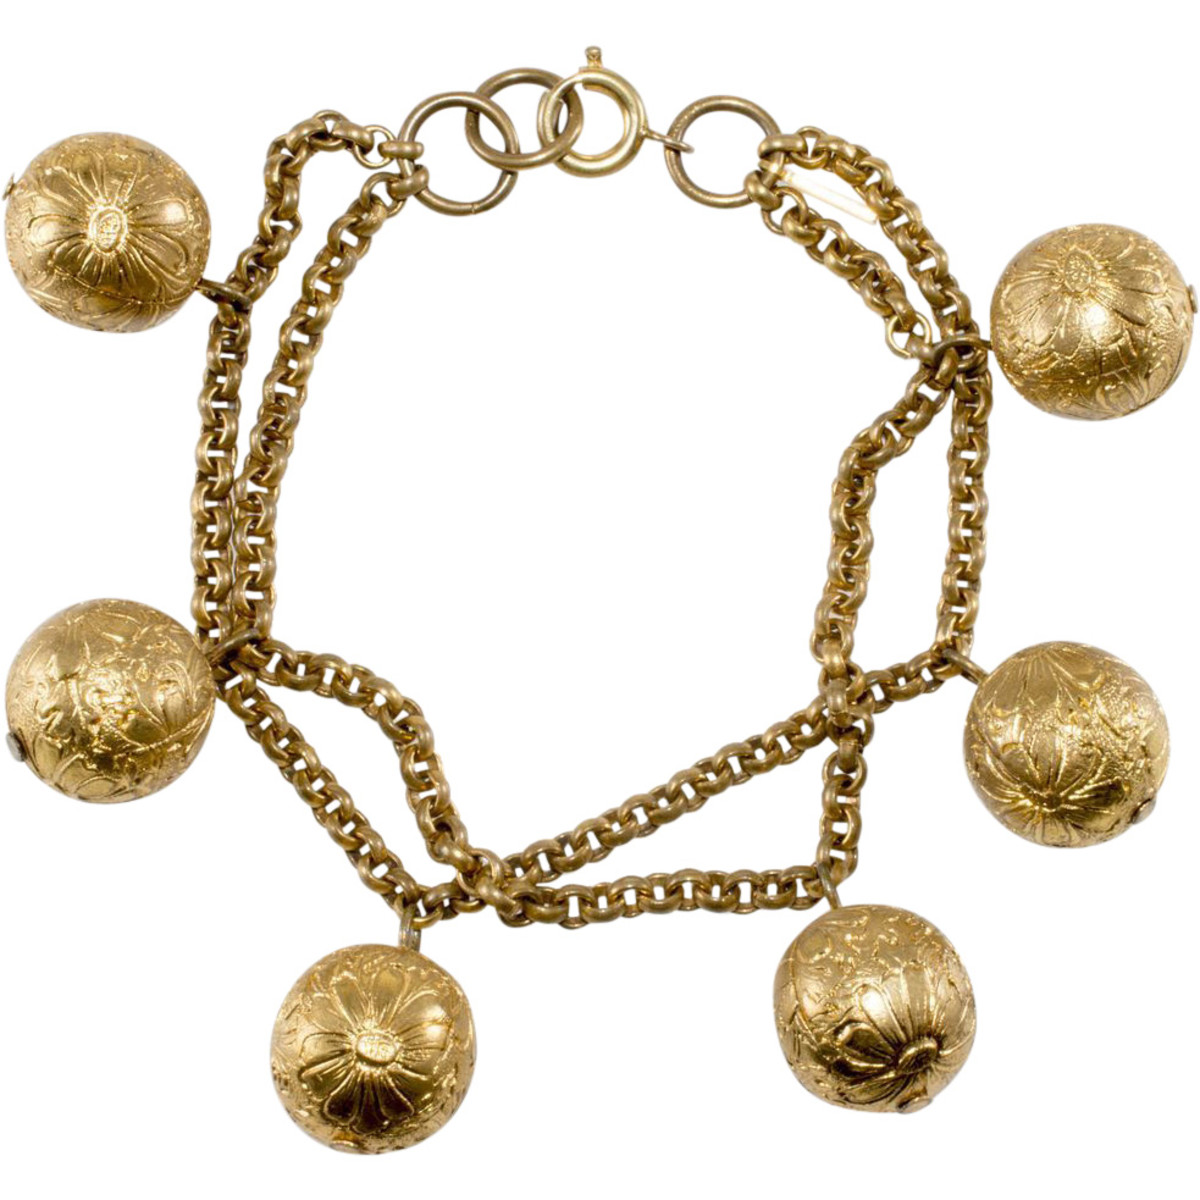 Monet Jewelers “Hindu Bells” bracelet, 1937.